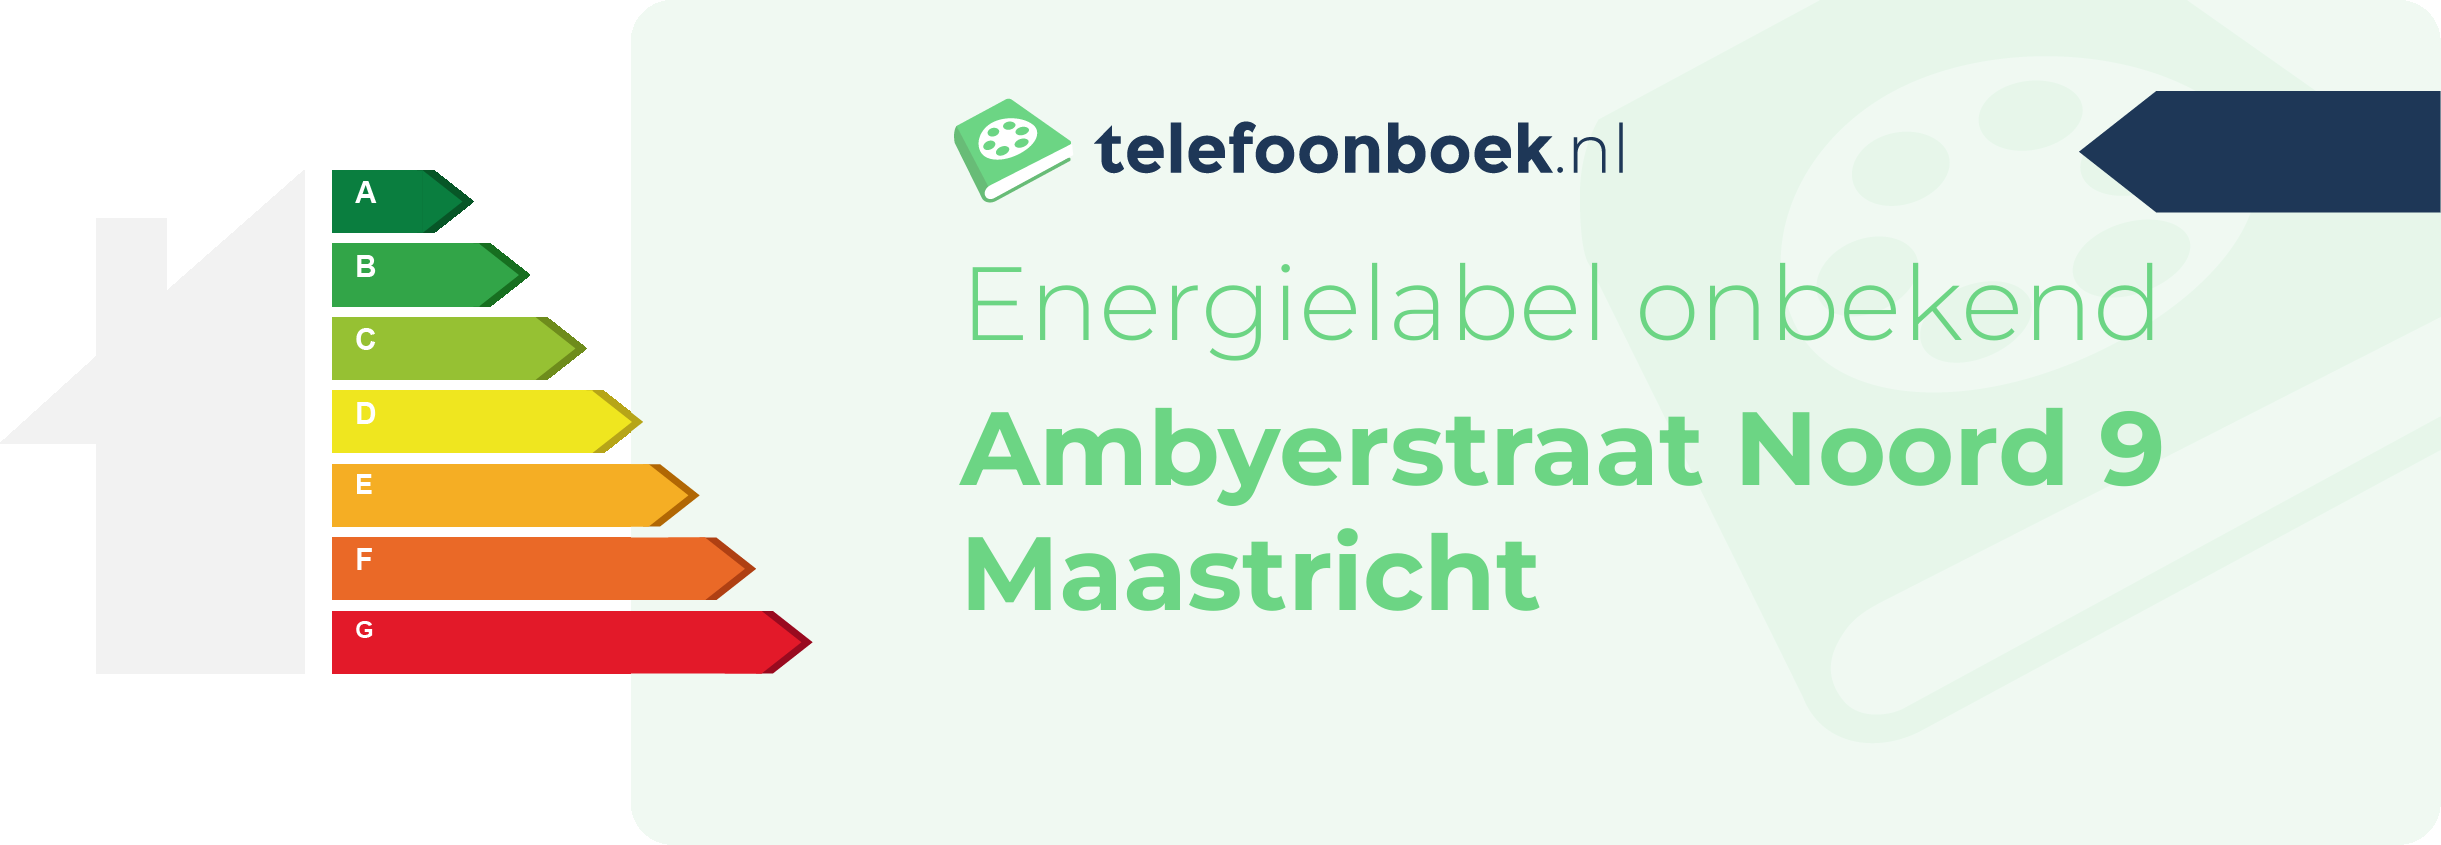 Energielabel Ambyerstraat Noord 9 Maastricht